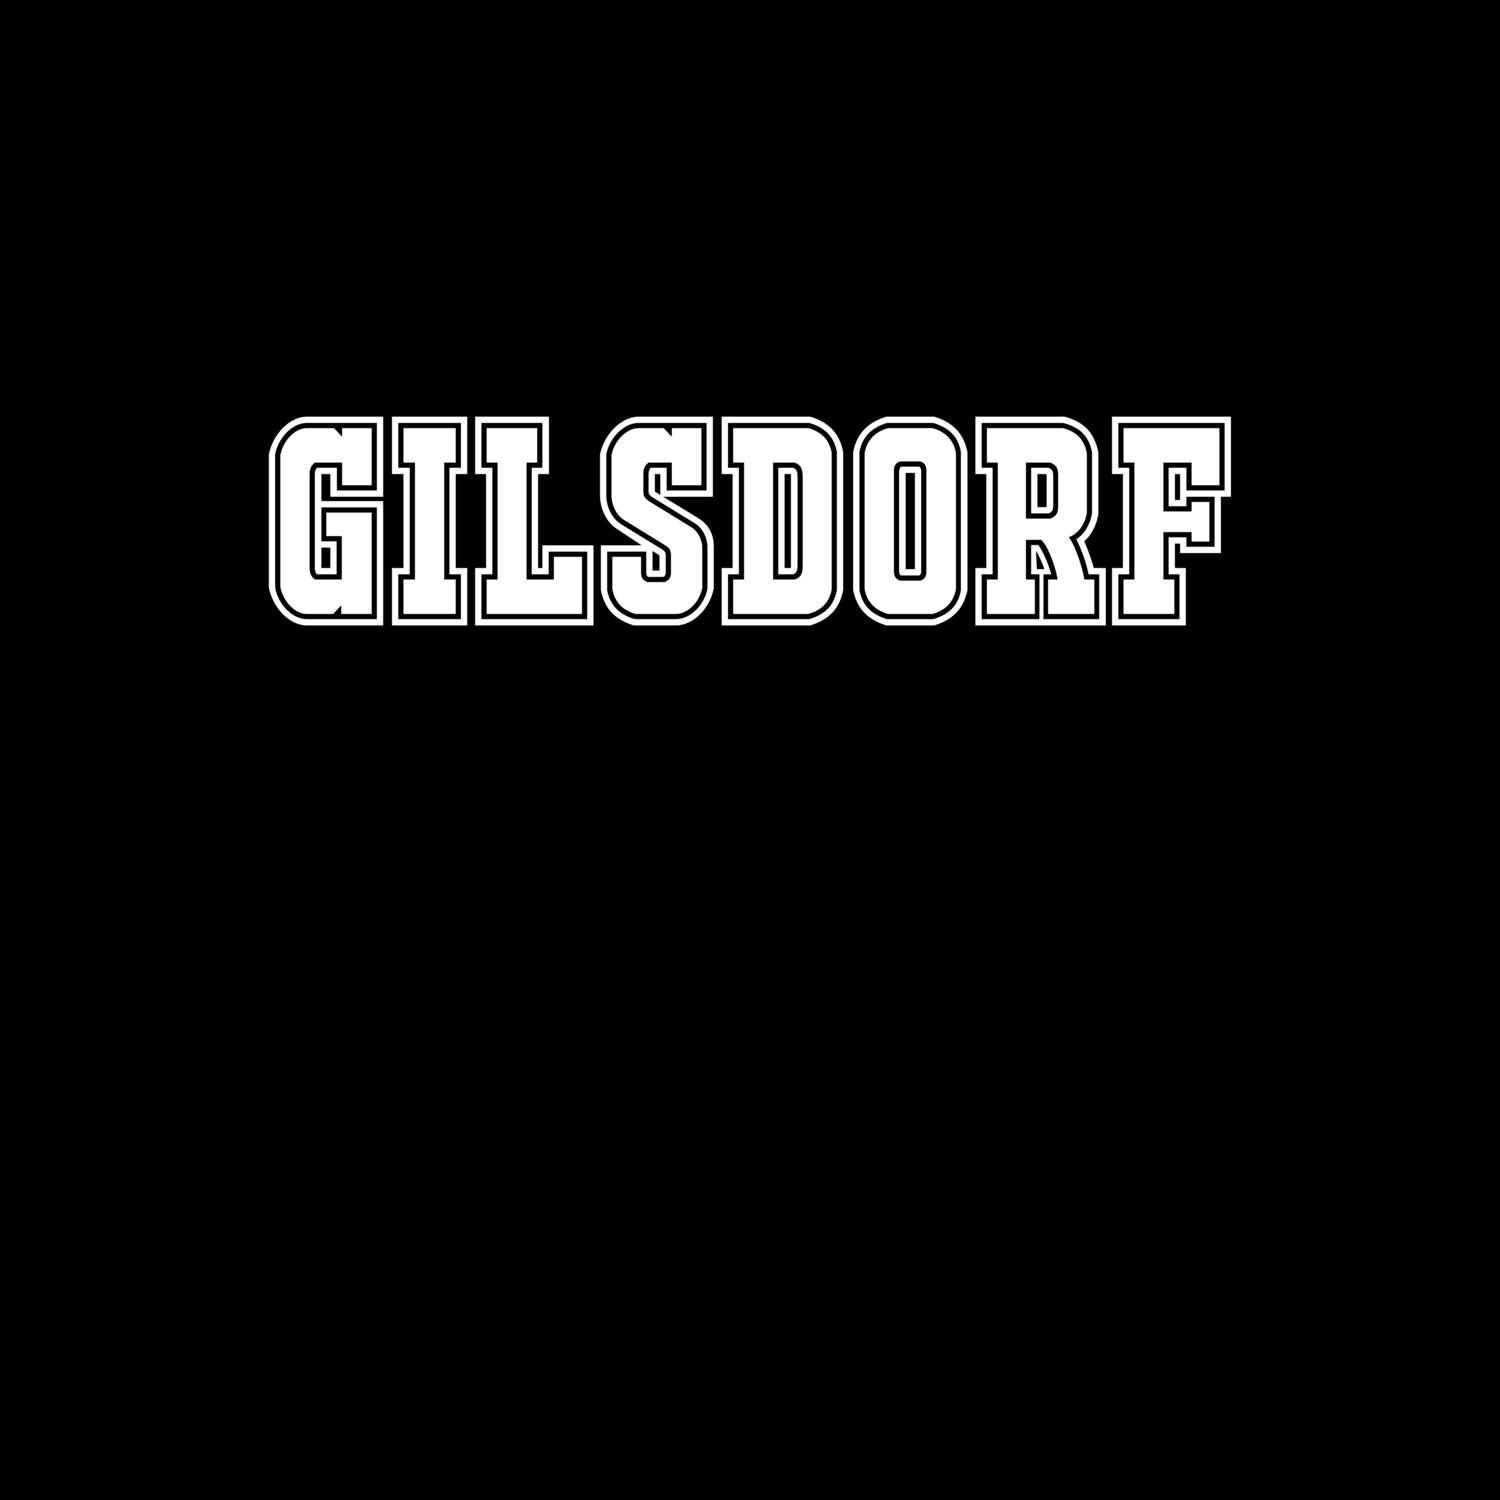 Gilsdorf T-Shirt »Classic«